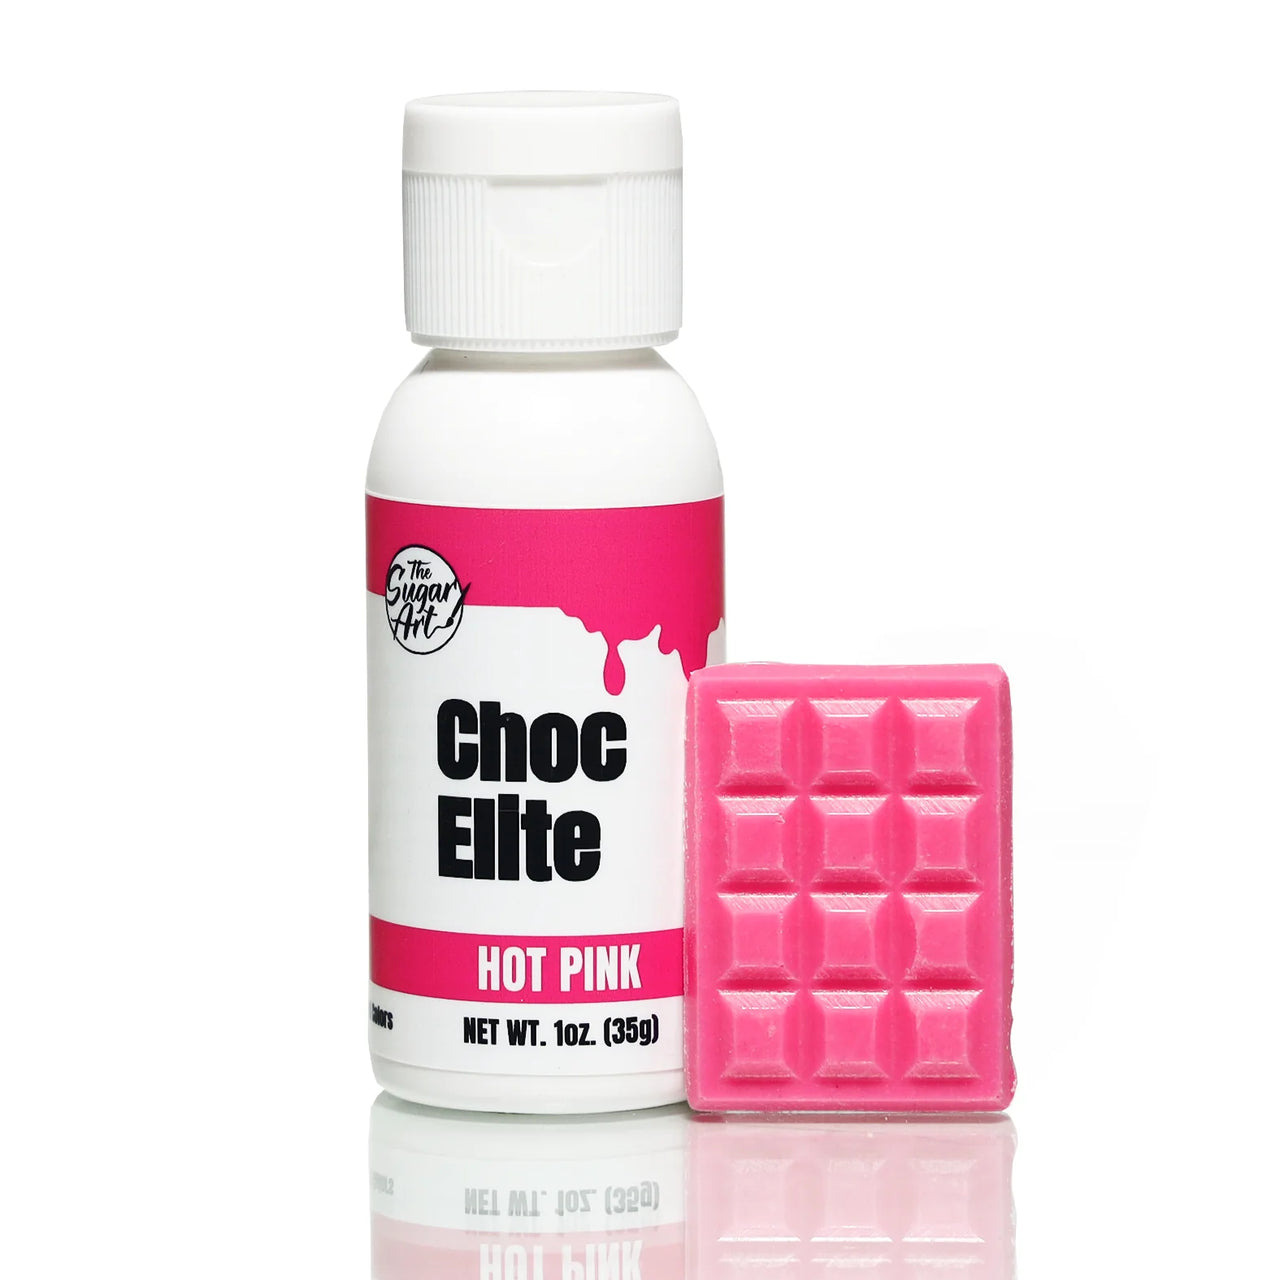 Hot Pink Choc Elite 1oz (35g)